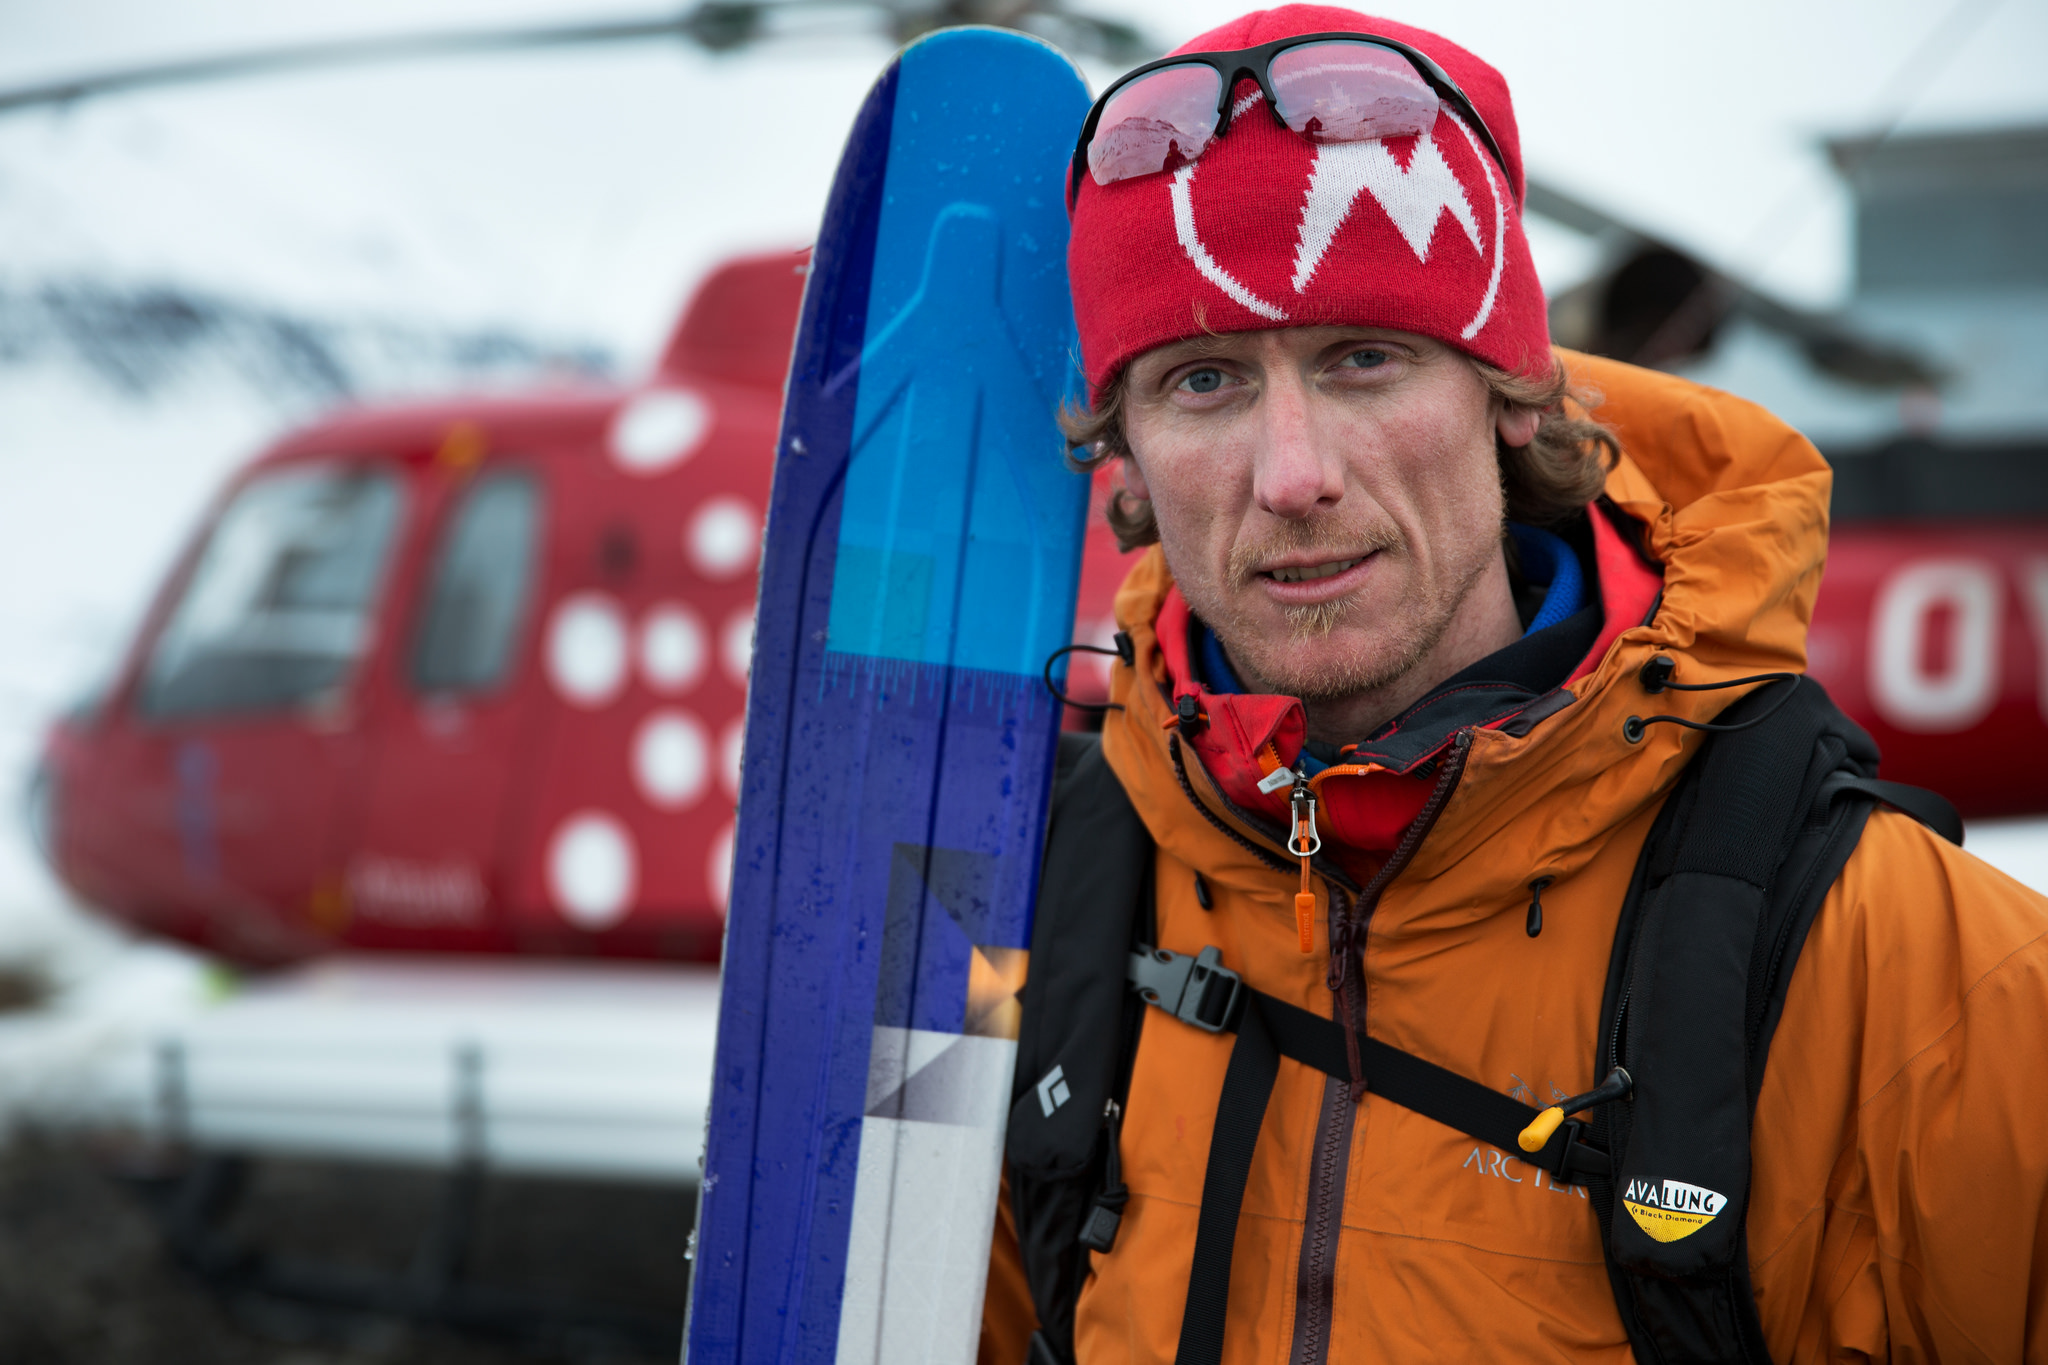 Jökull Bergmann, the owner of Arctic Heli Skiing